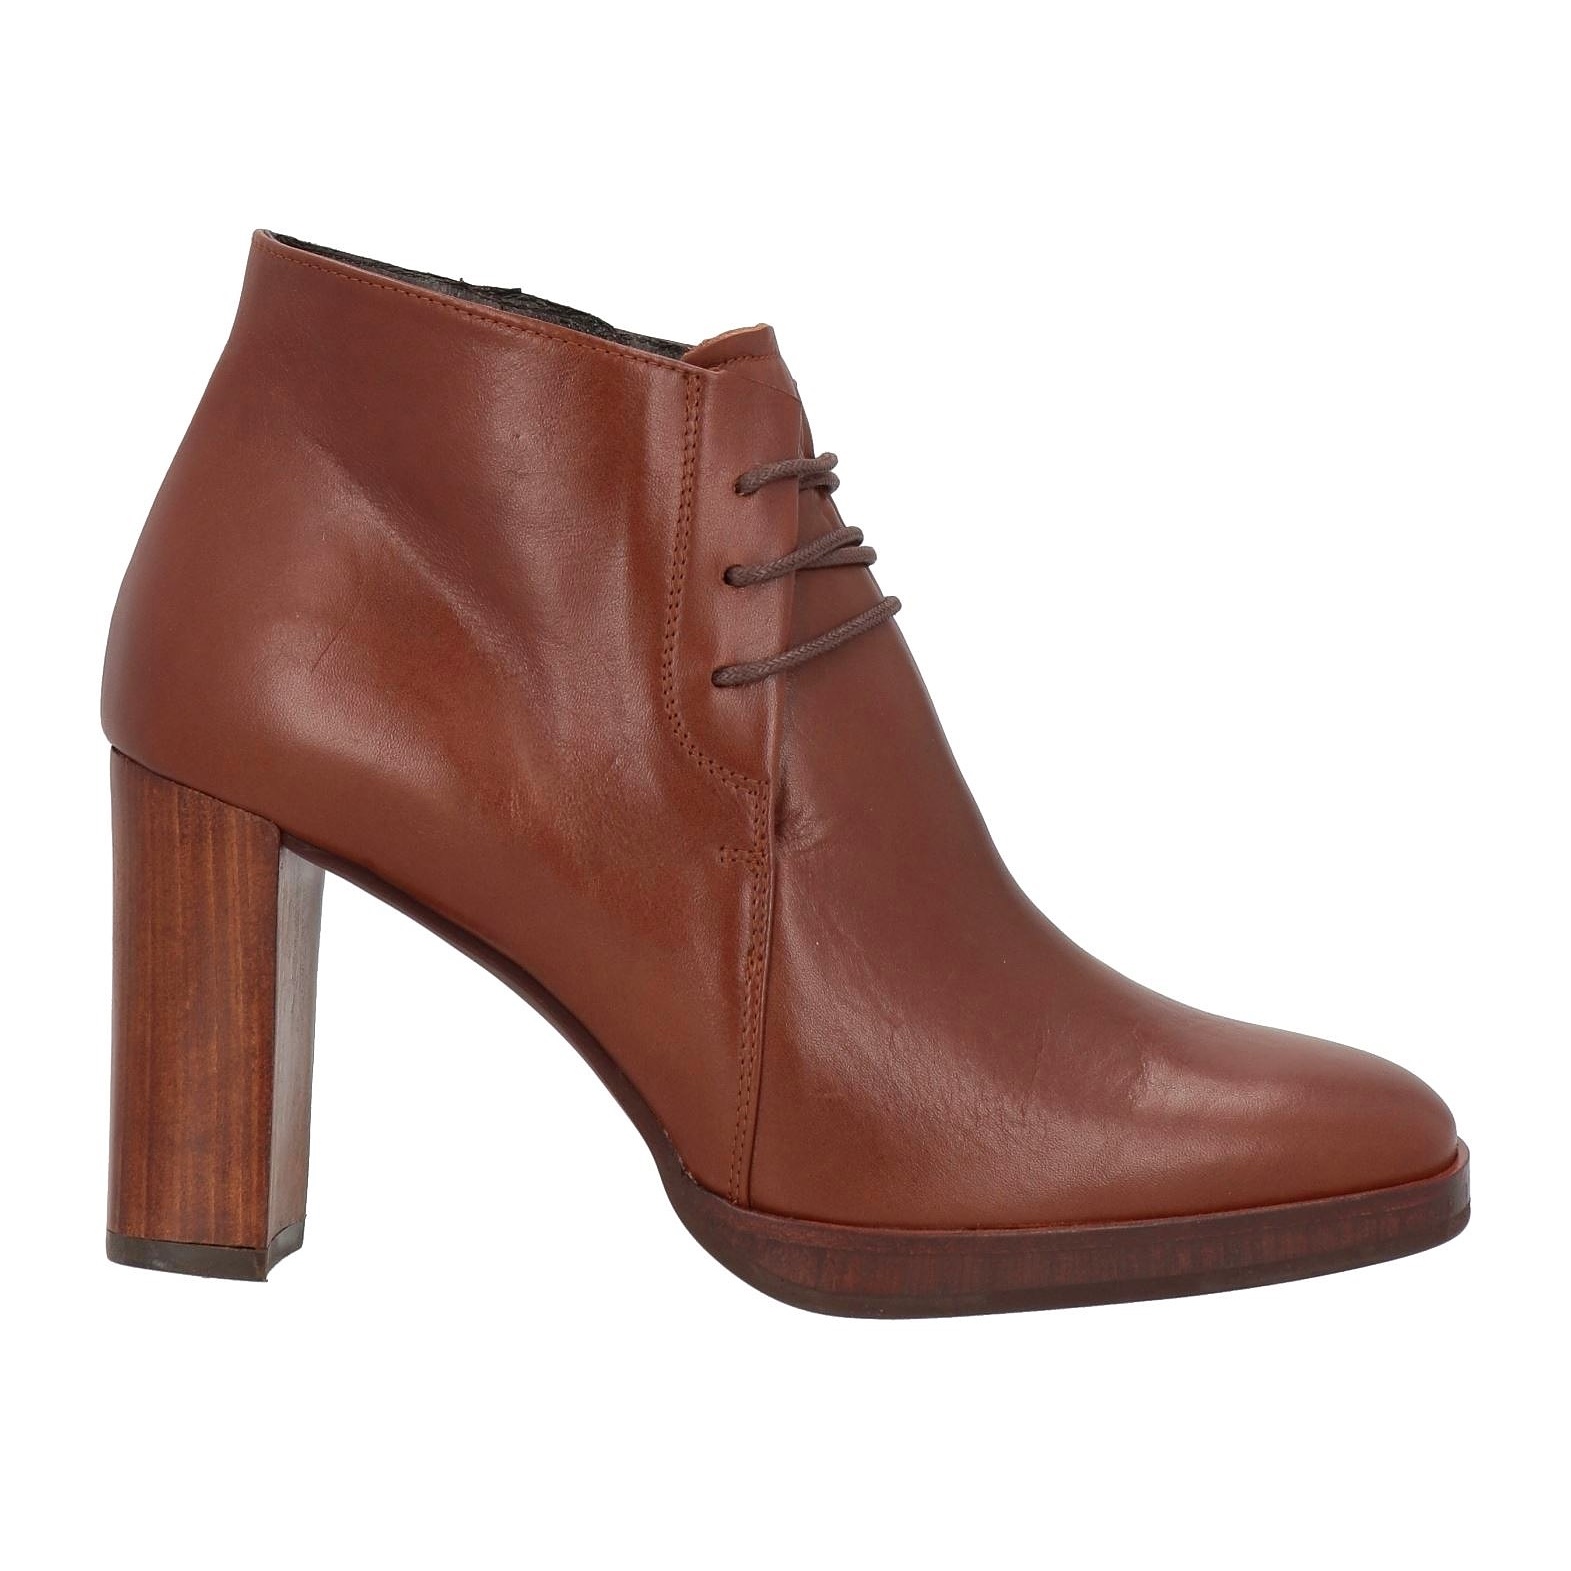 Ботинки Zinda Lace-up Leather Round Toe Square Heel, коричневый цена и фото